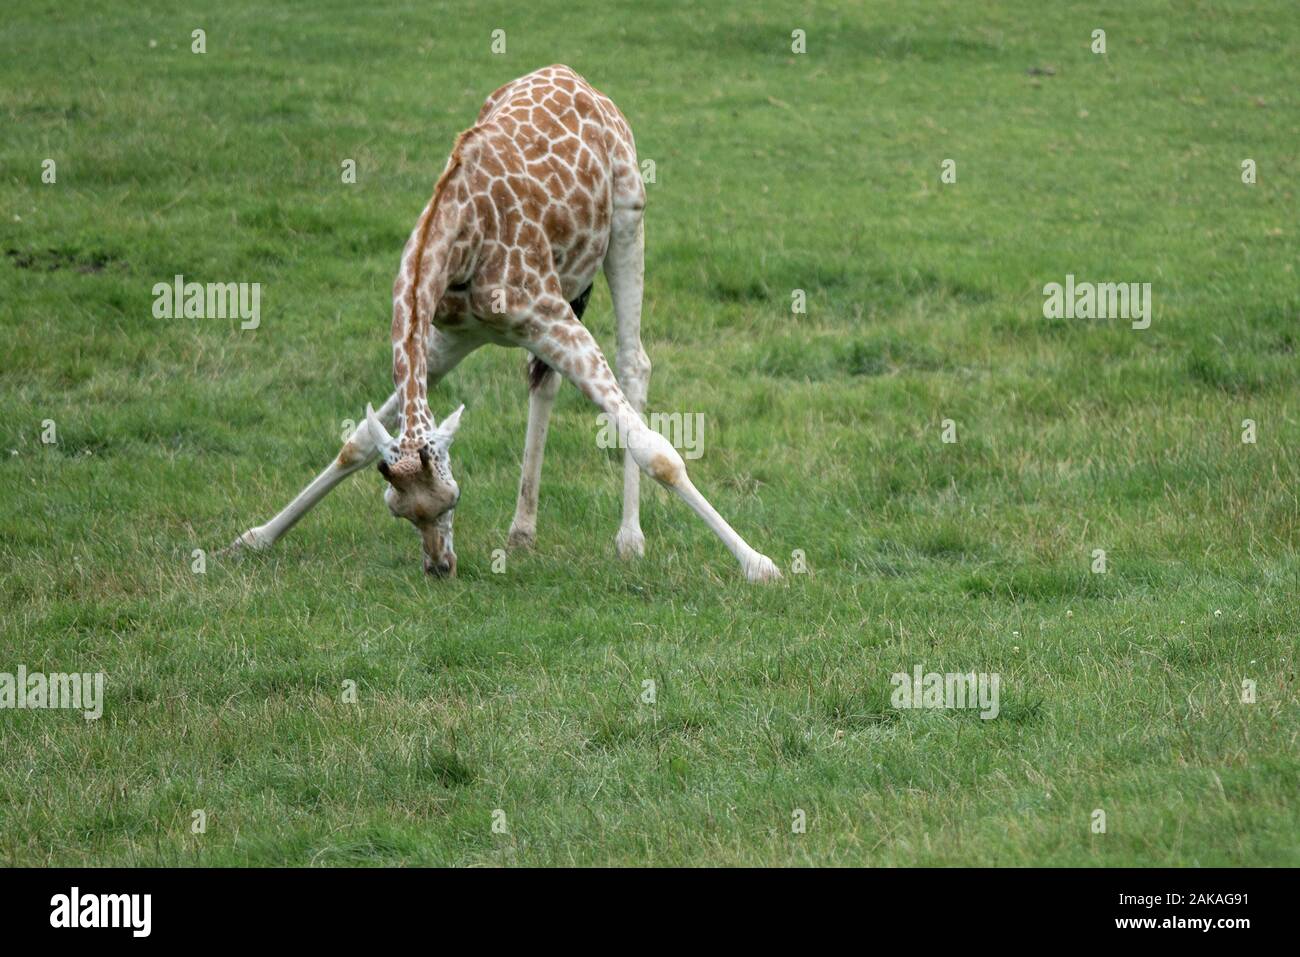 A giraffe grazes on the grassland Stock Photo